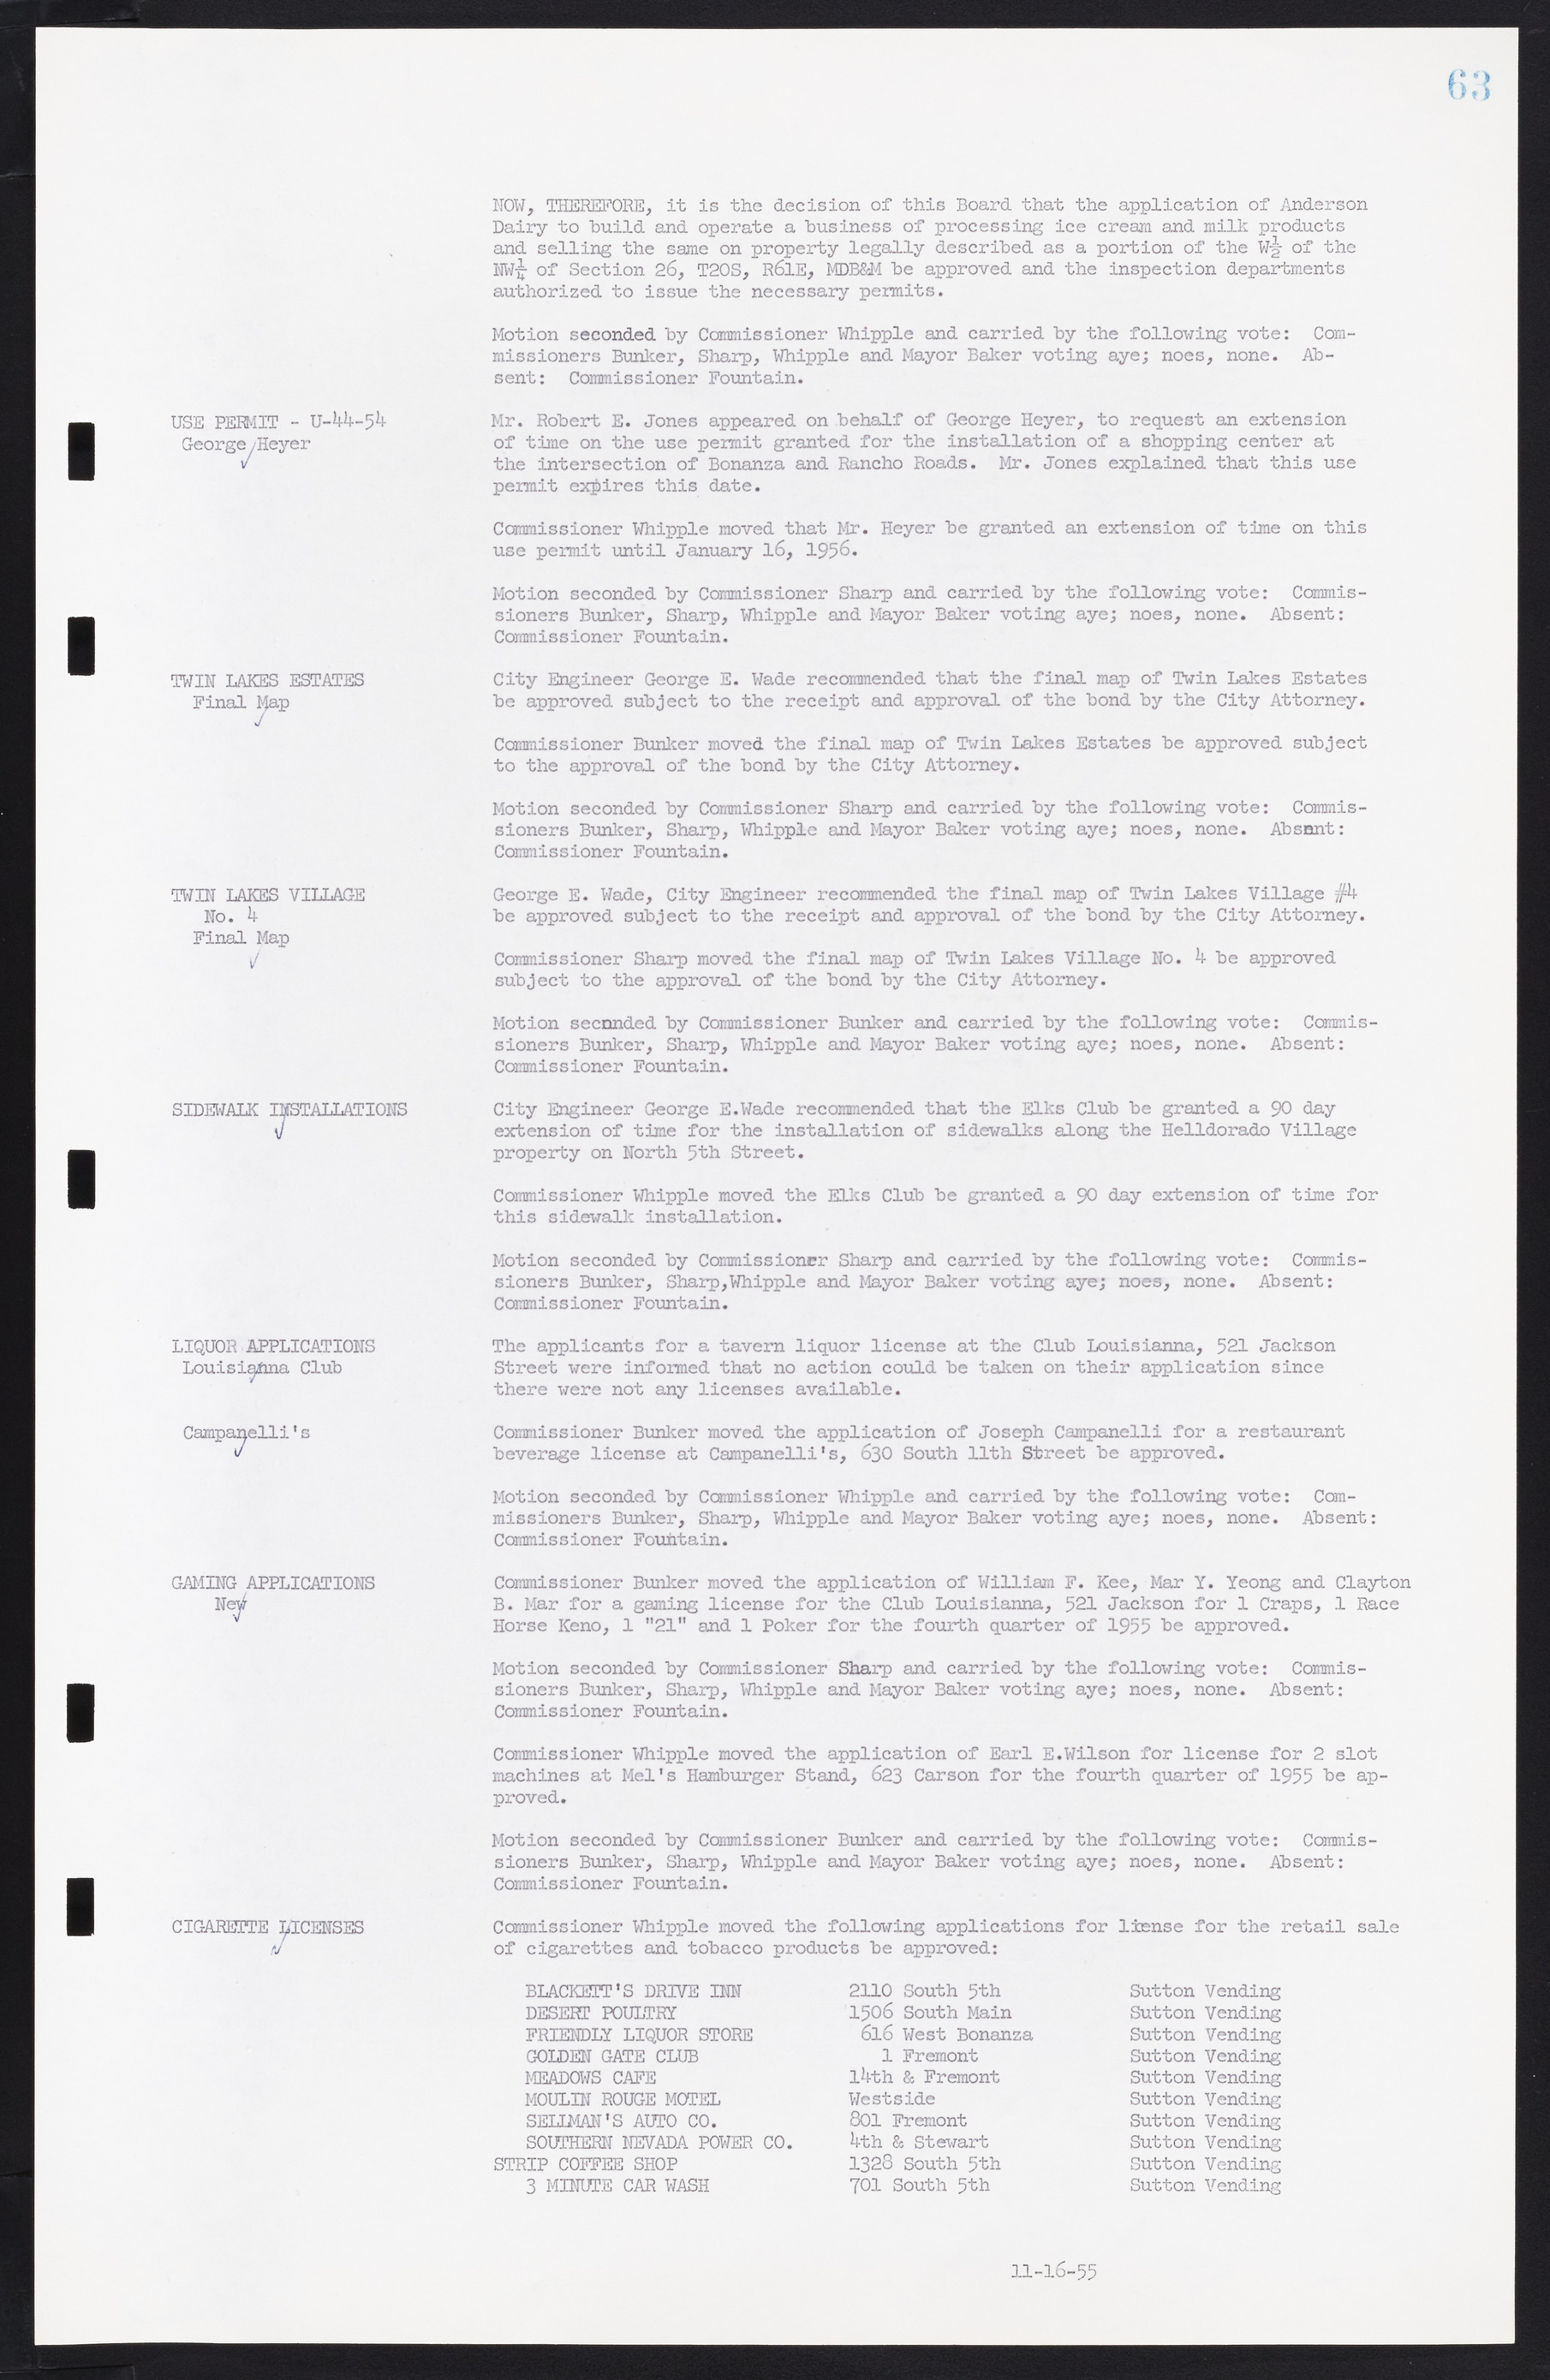 Las Vegas City Commission Minutes, September 21, 1955 to November 20, 1957, lvc000010-71